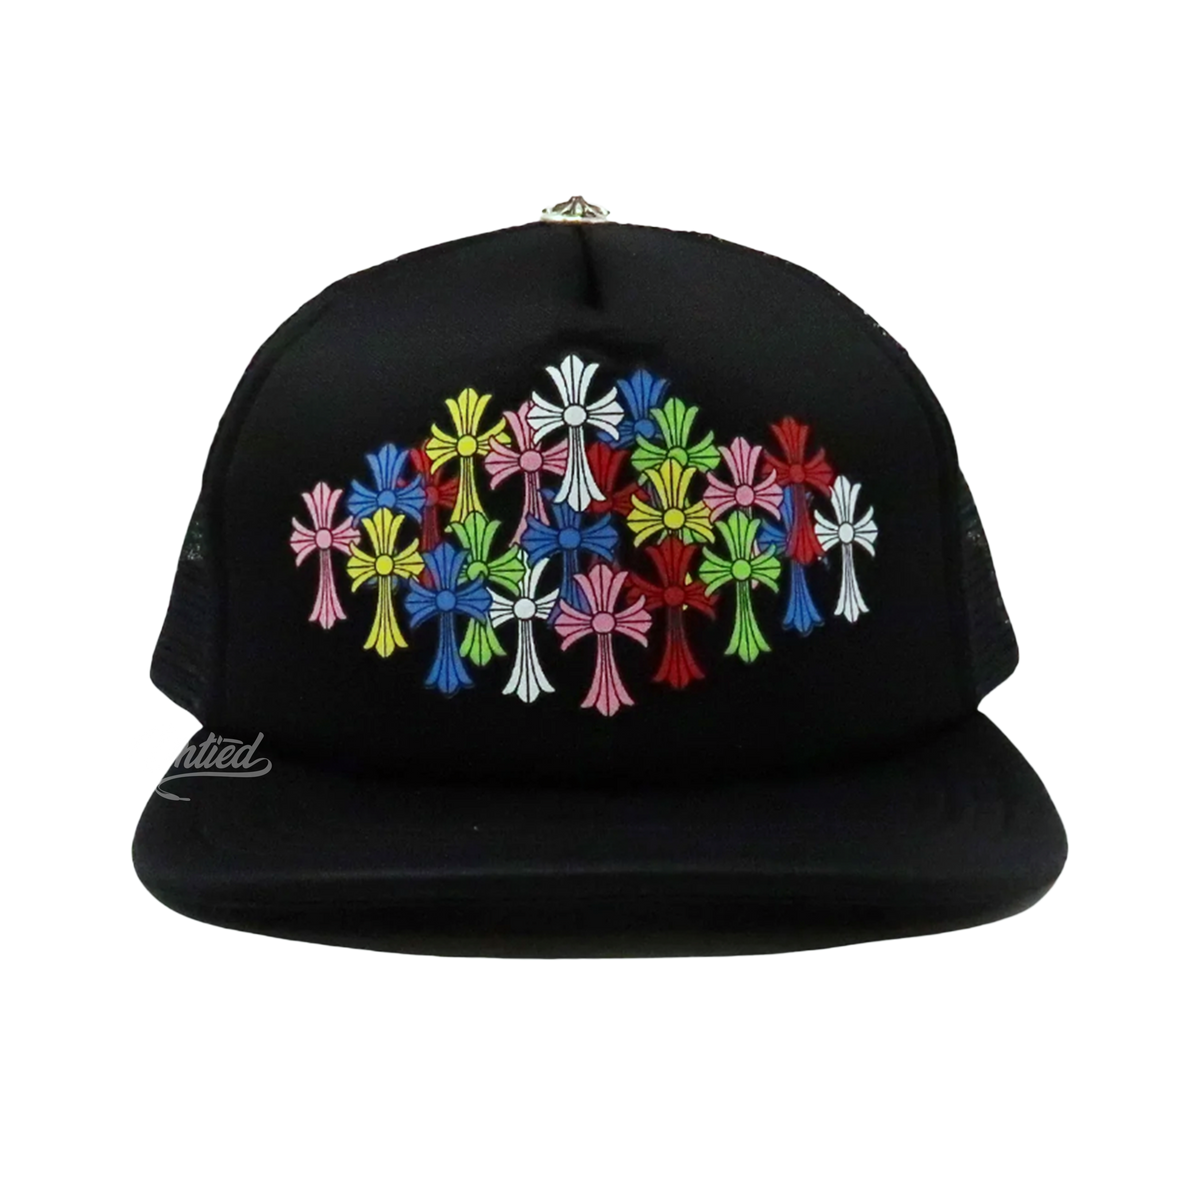 Chrome Hearts Trucker Hat "Black Multicolor Cross"